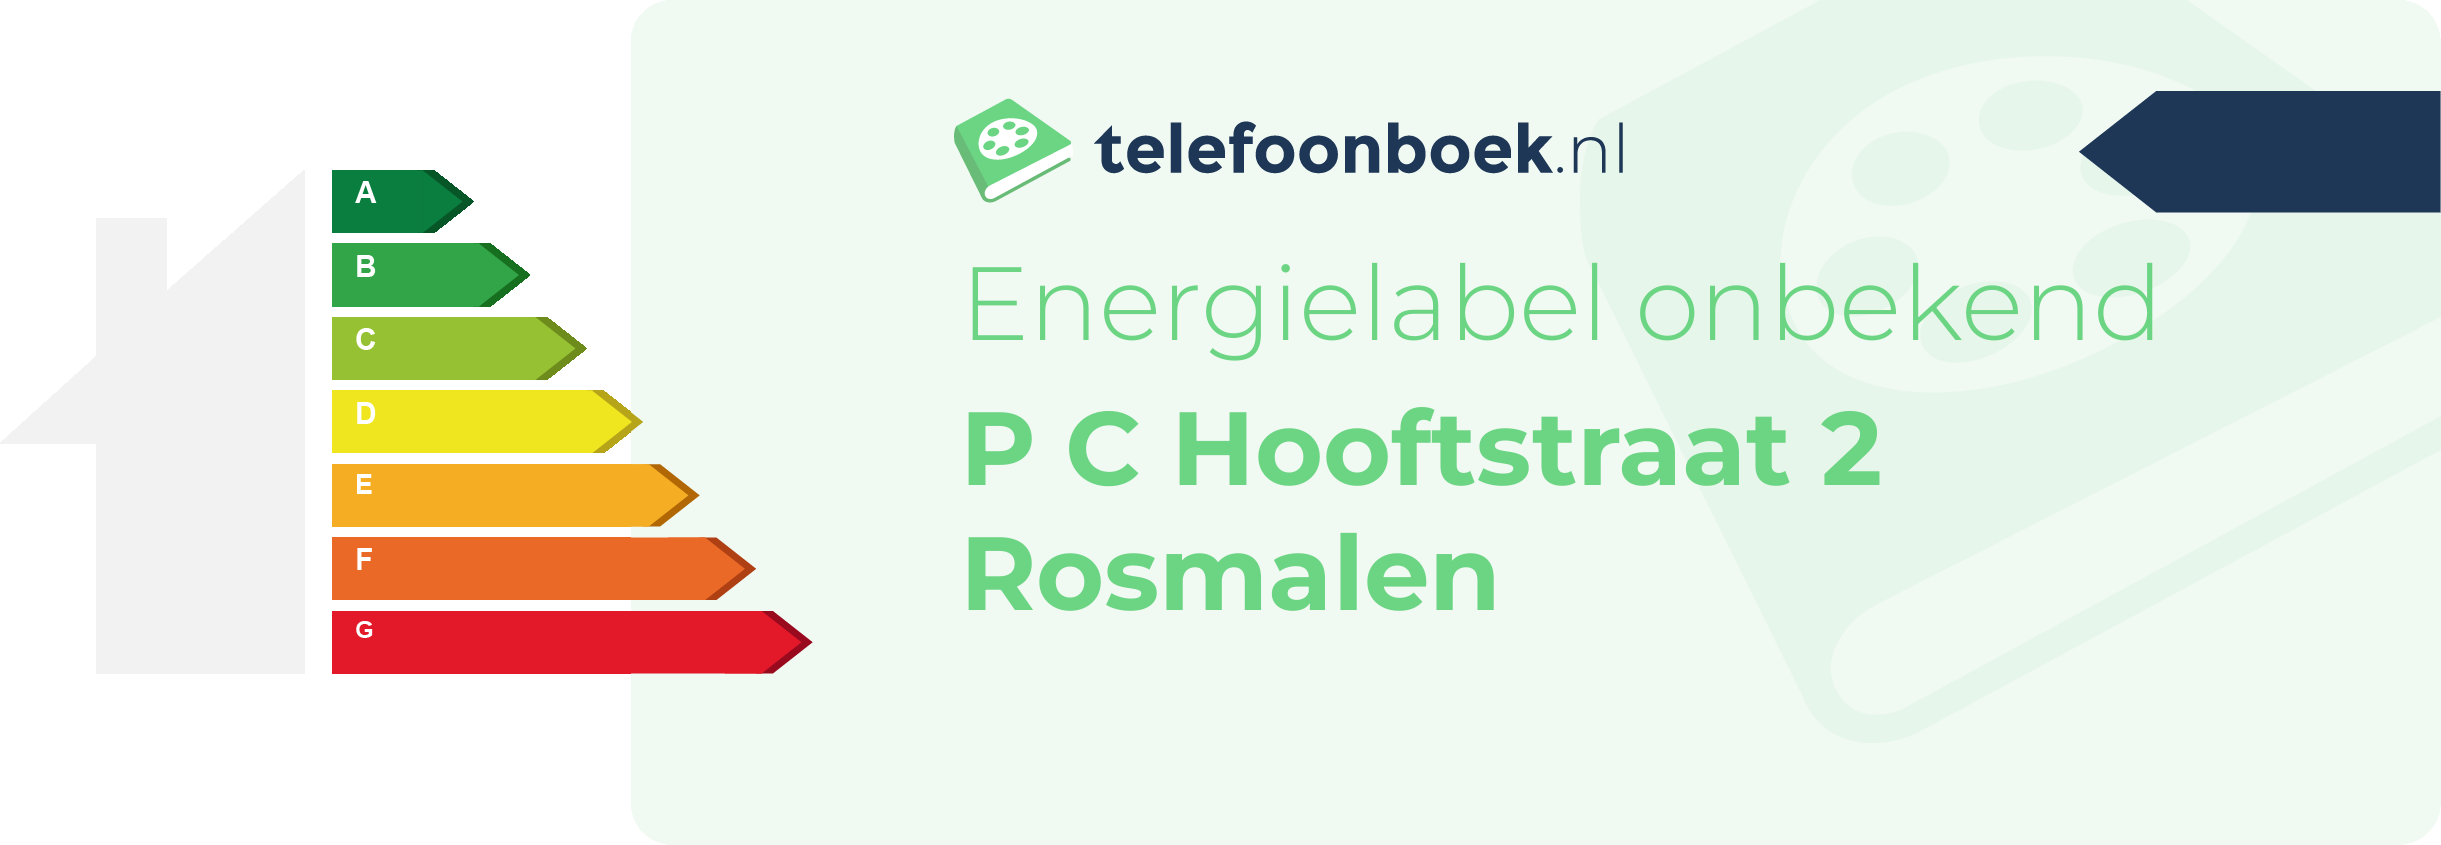 Energielabel P C Hooftstraat 2 Rosmalen